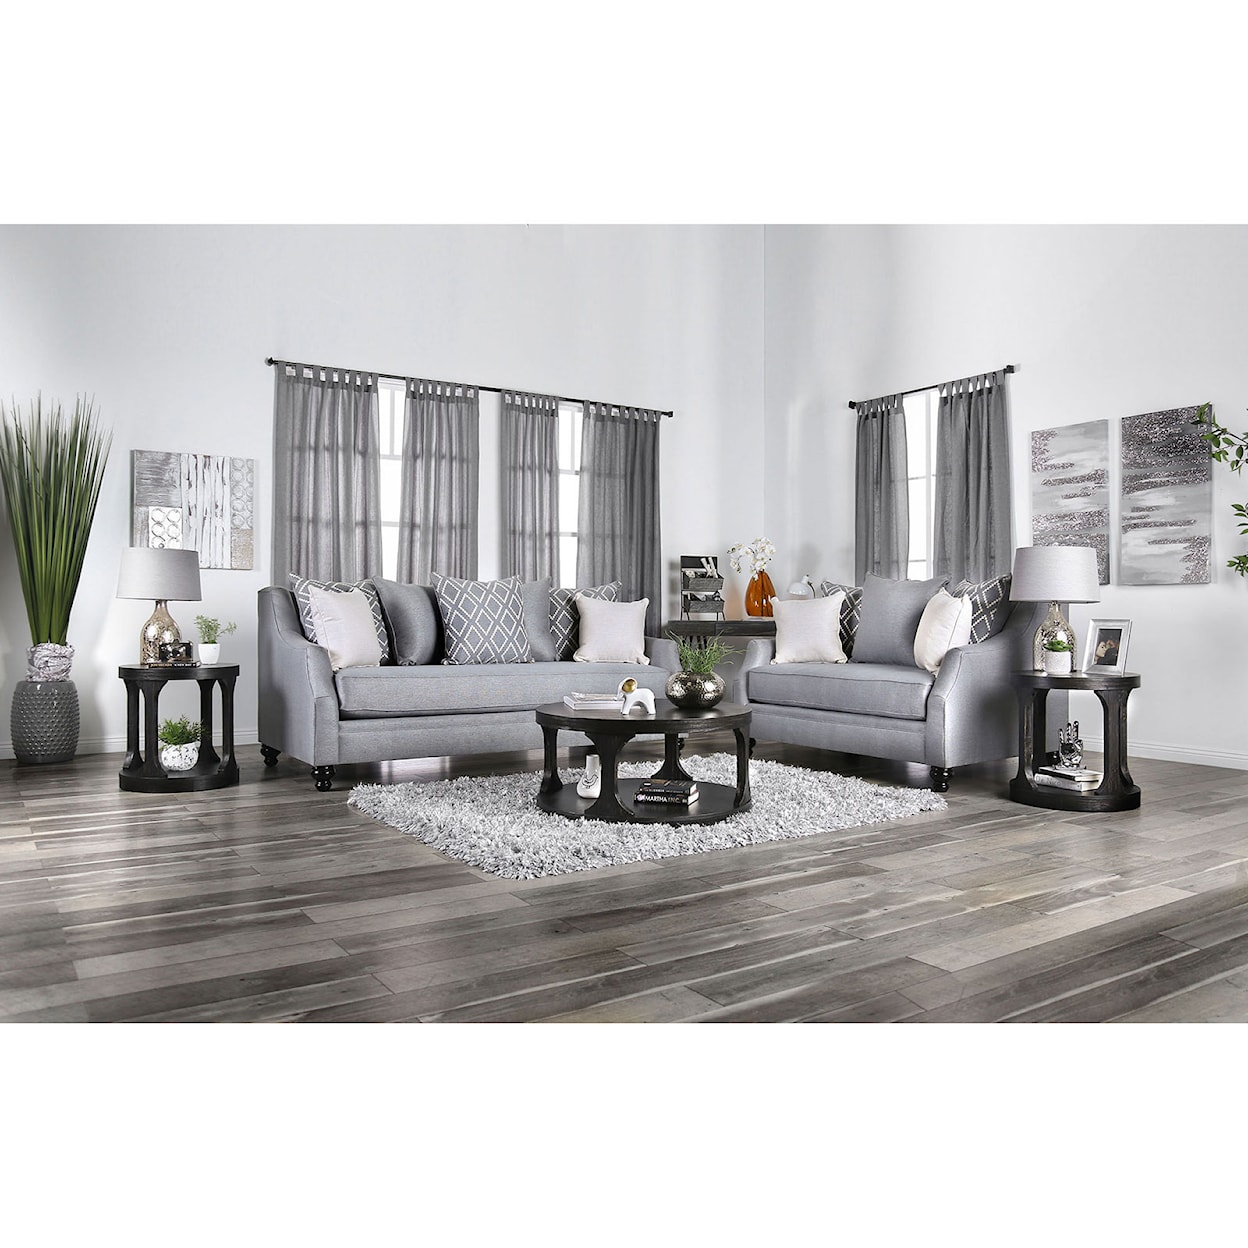 Furniture of America Nefyn Sofa and Loveseat Set